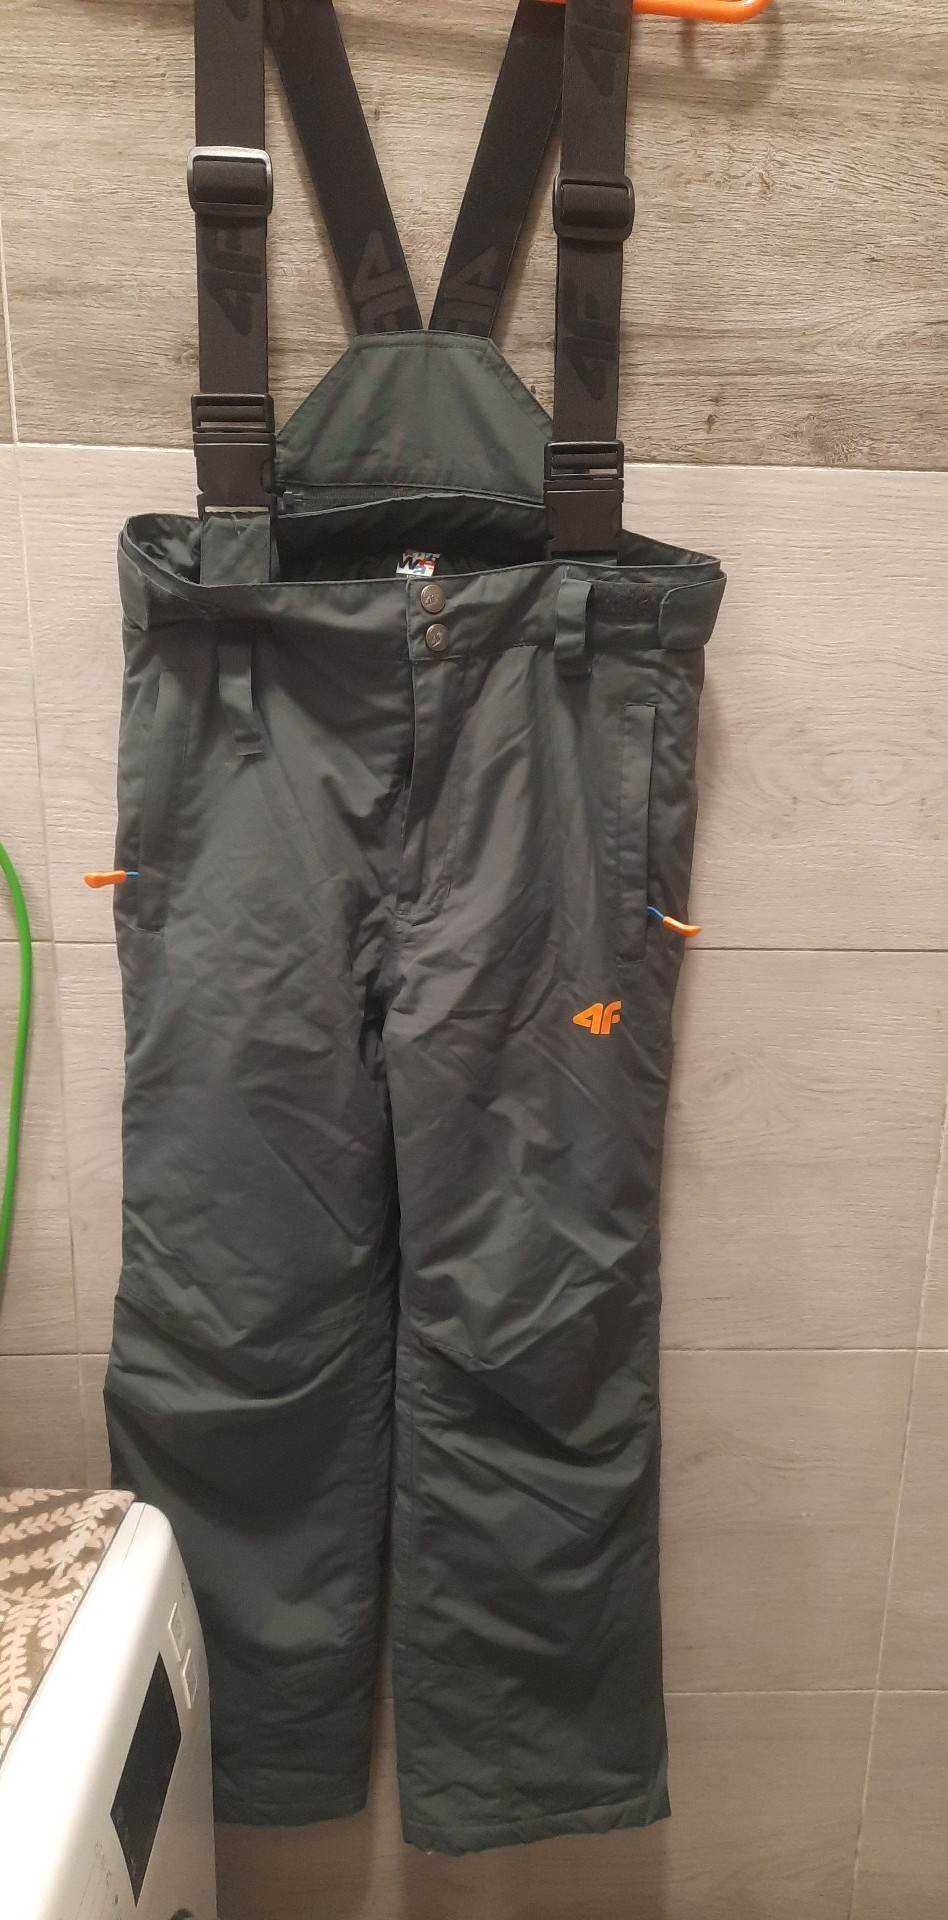 4 F spodnie narciarskie  152 cm